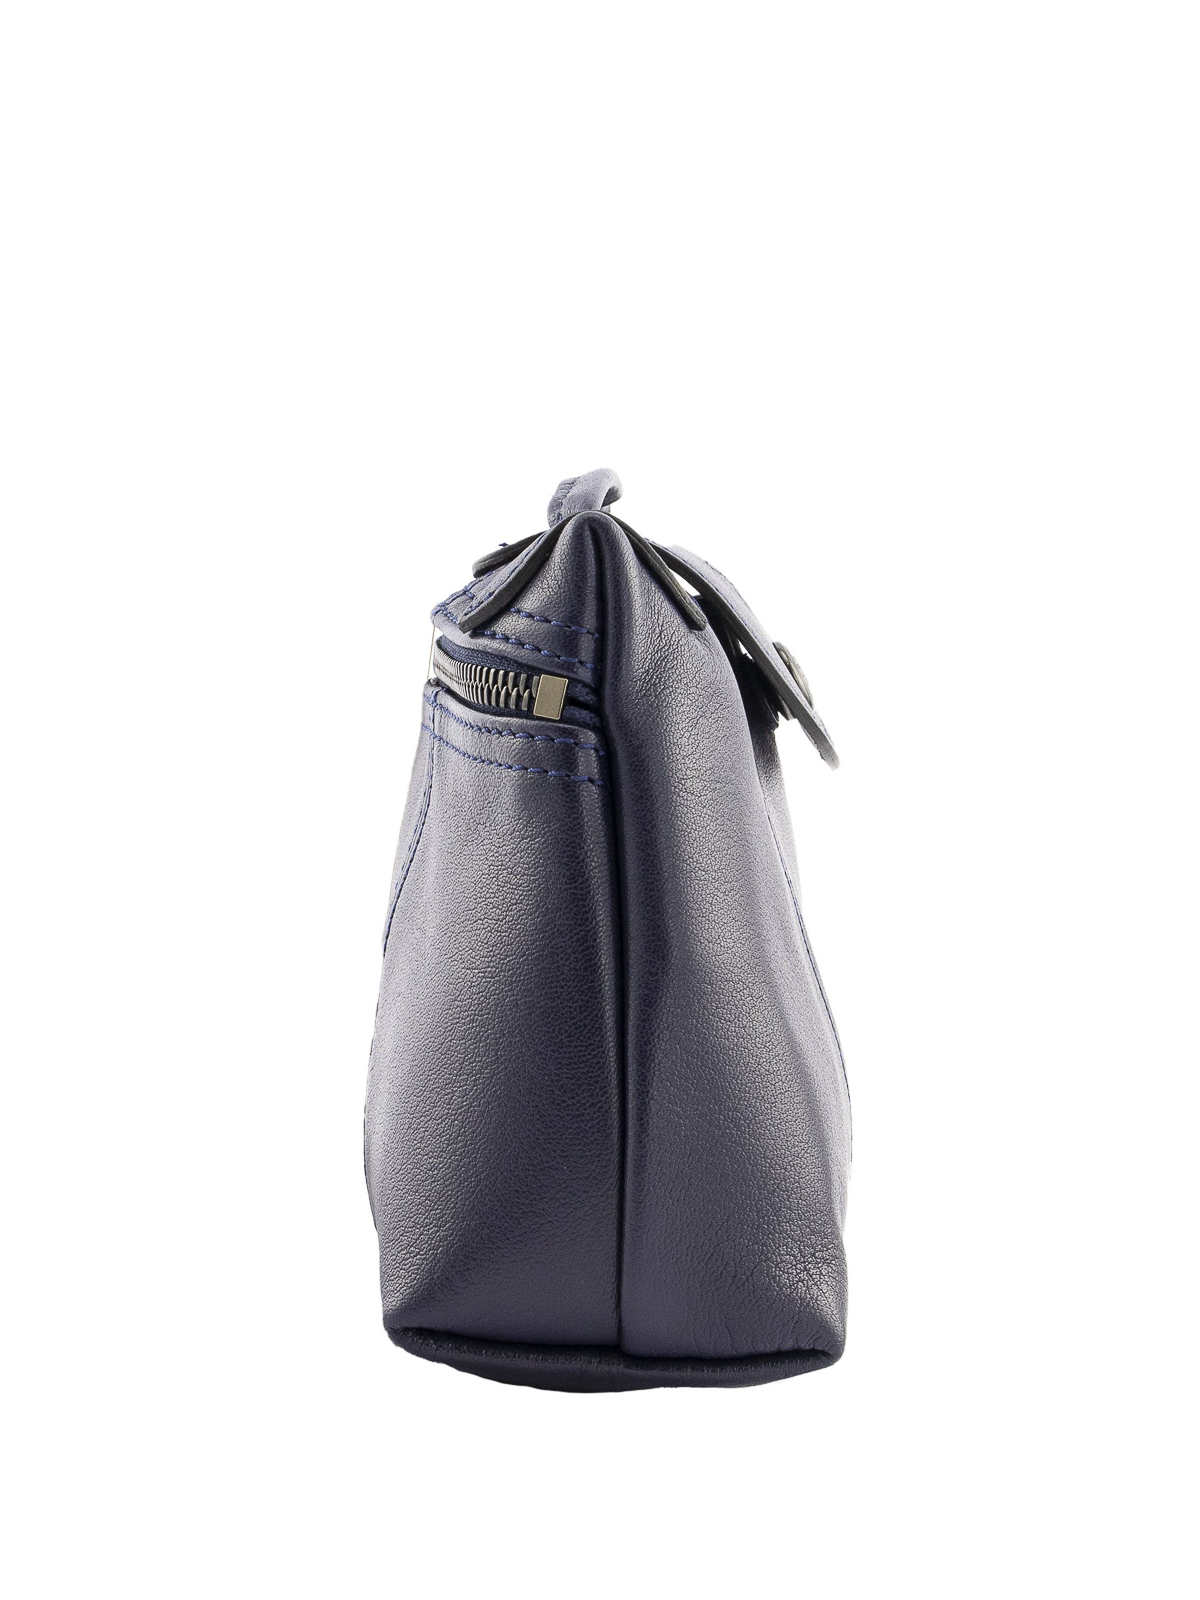 Cross body bags Longchamp - Le Pliage Cuir crossbody bag - 1061757556